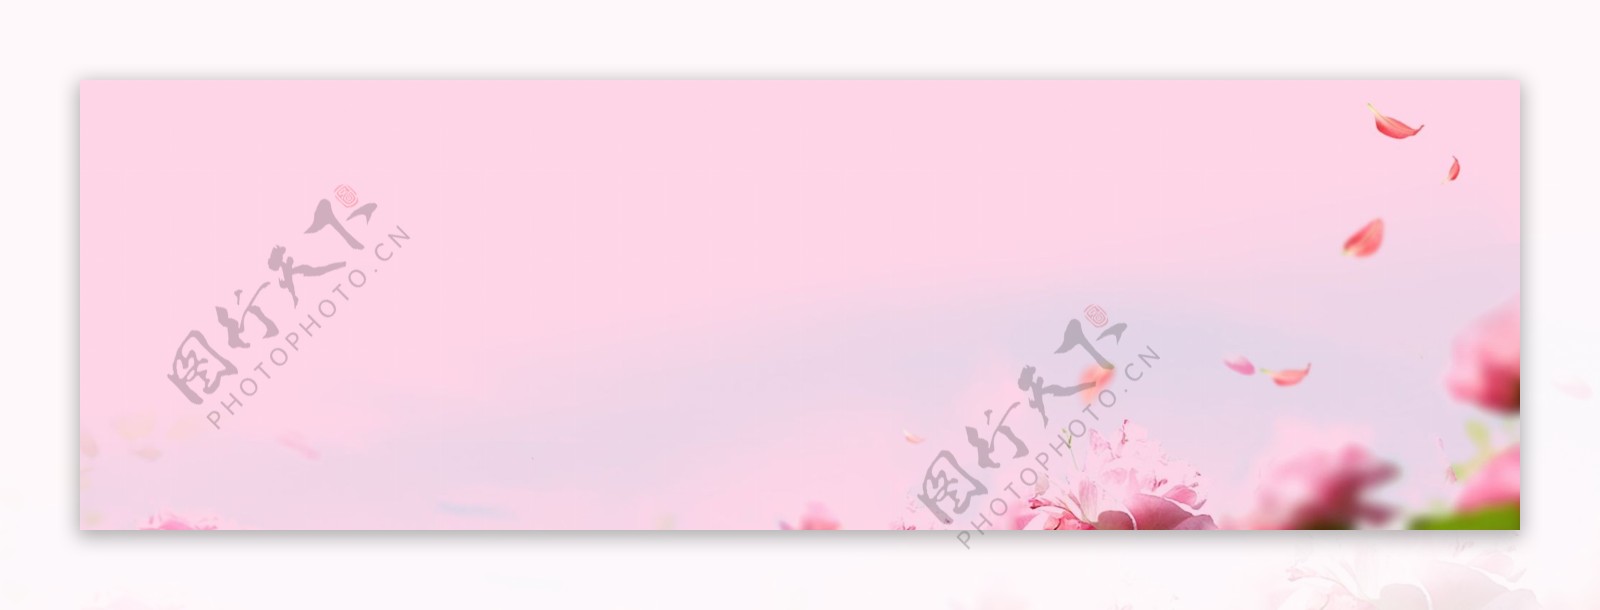 粉色玫瑰简约大气banner背景